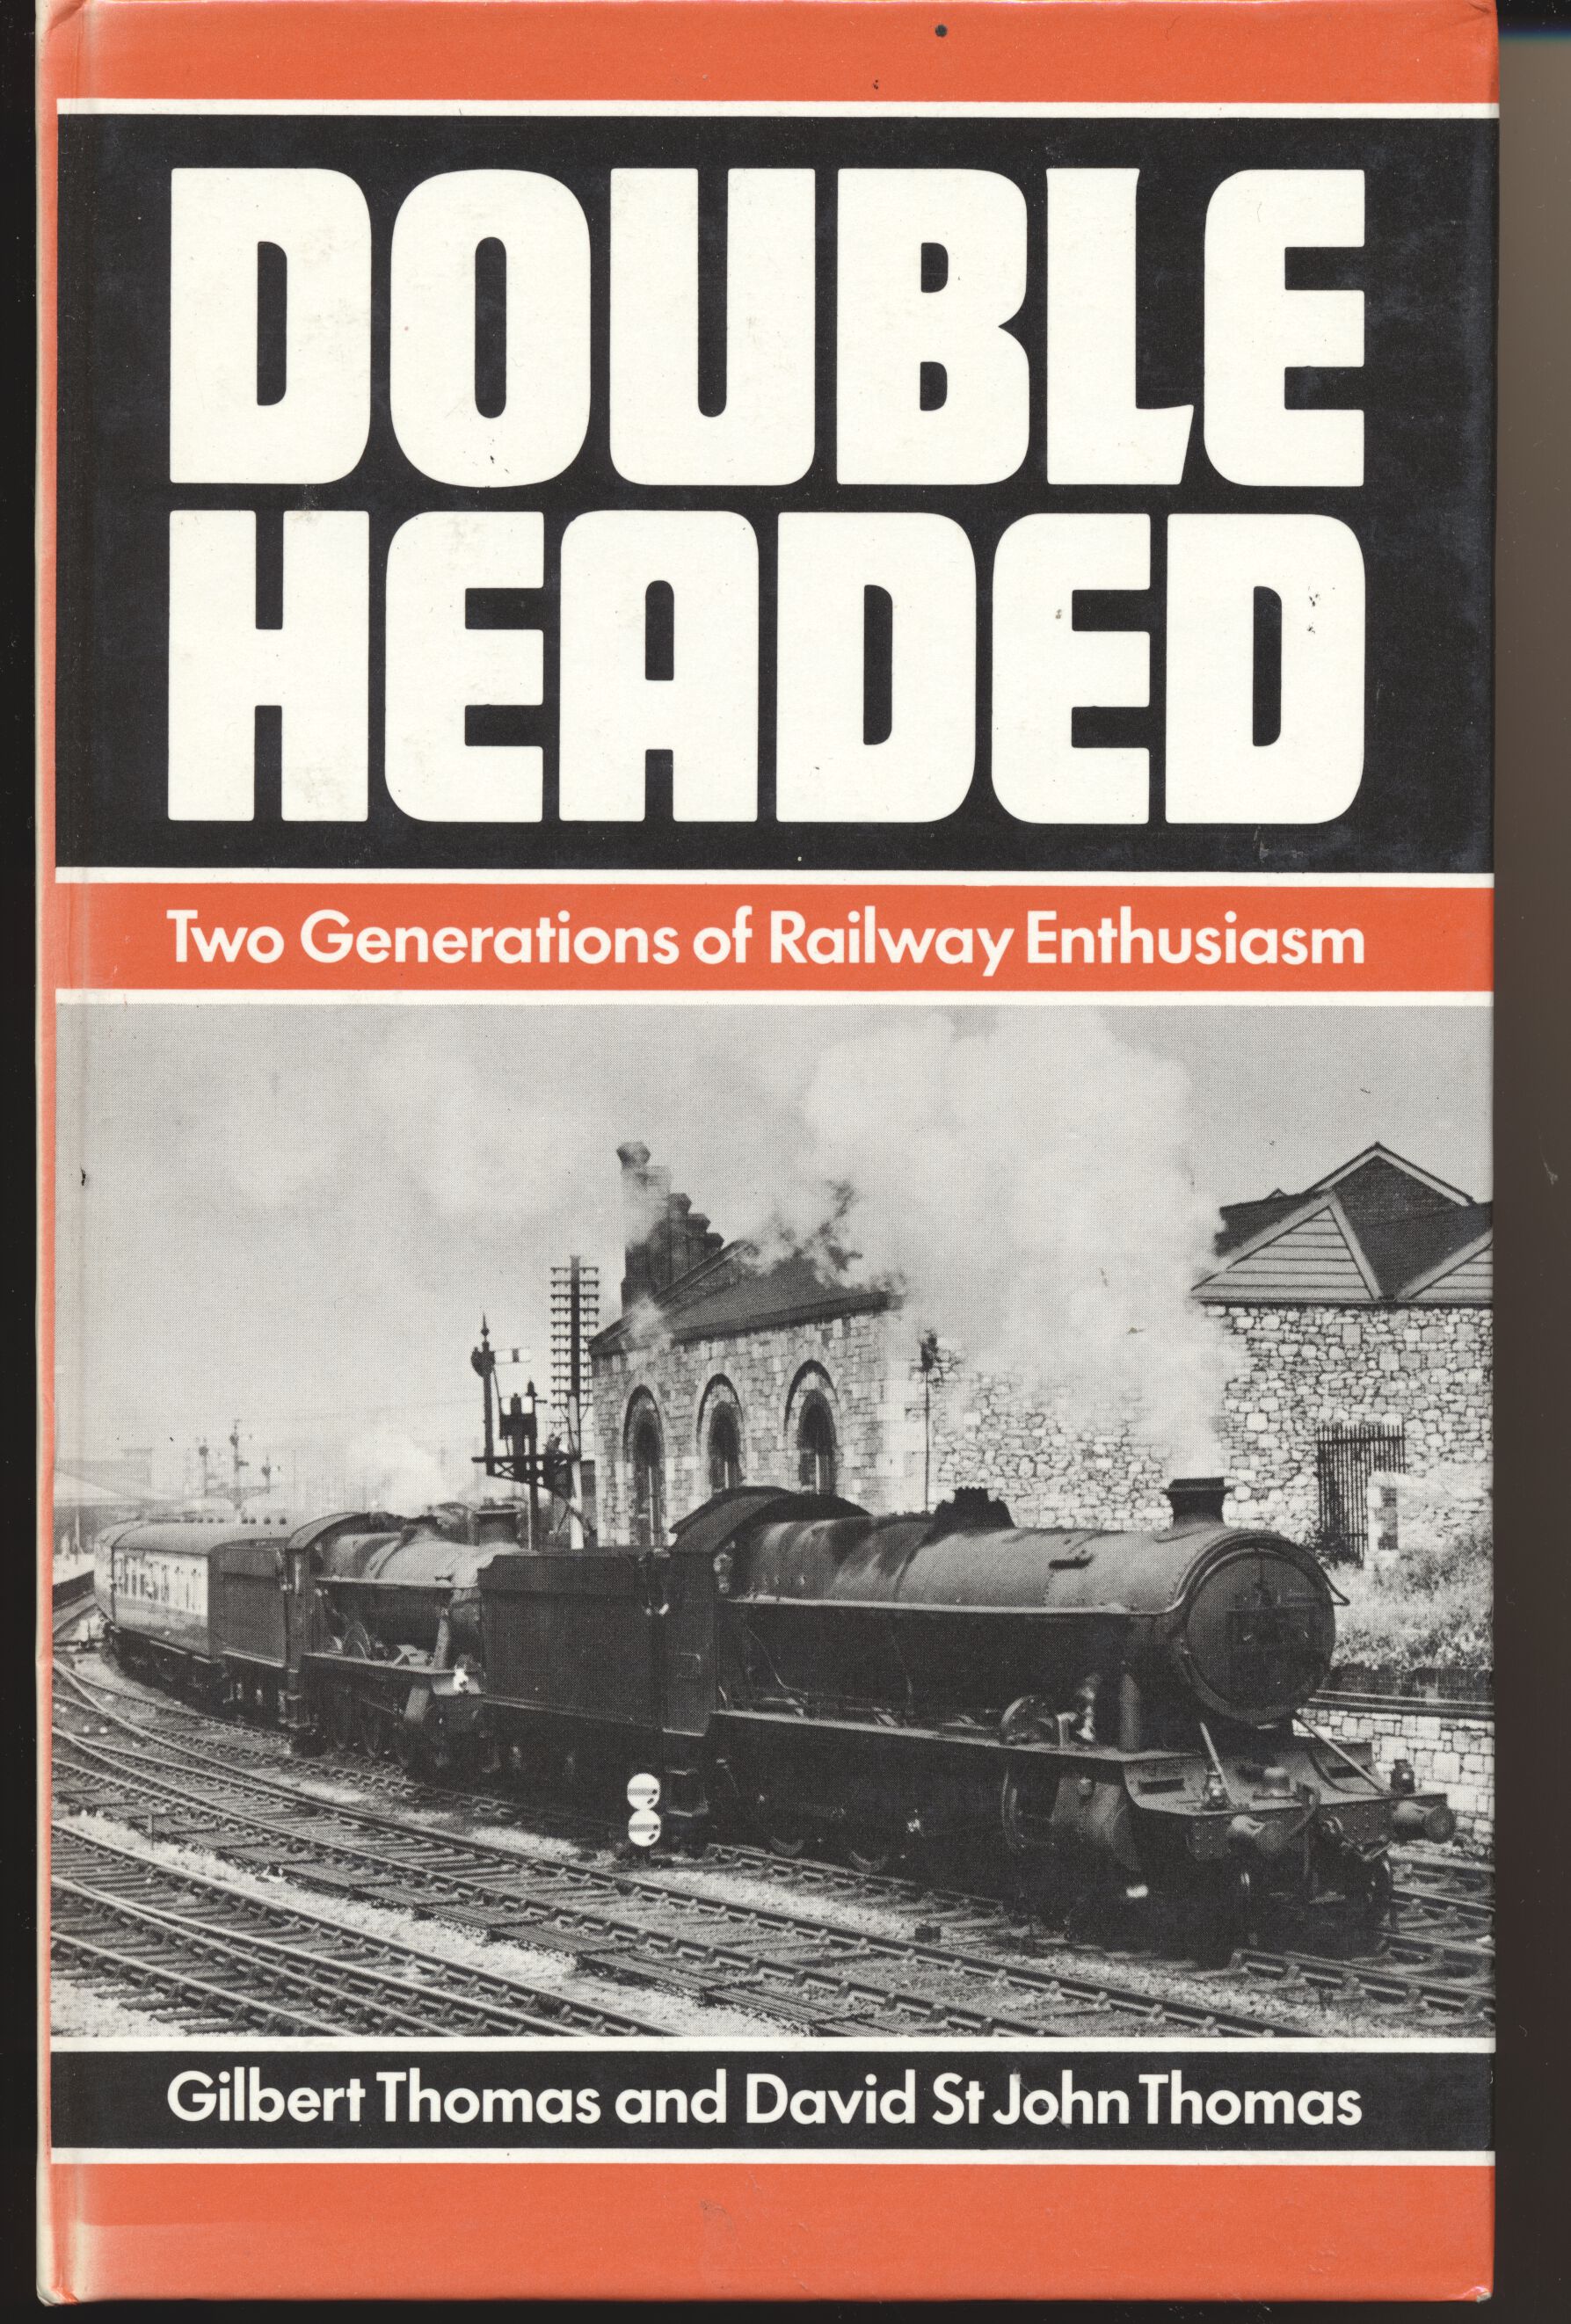 Double Headed - Two Generations of Railway Enthusiasm - Gilbert Thomas and David St John Thomas